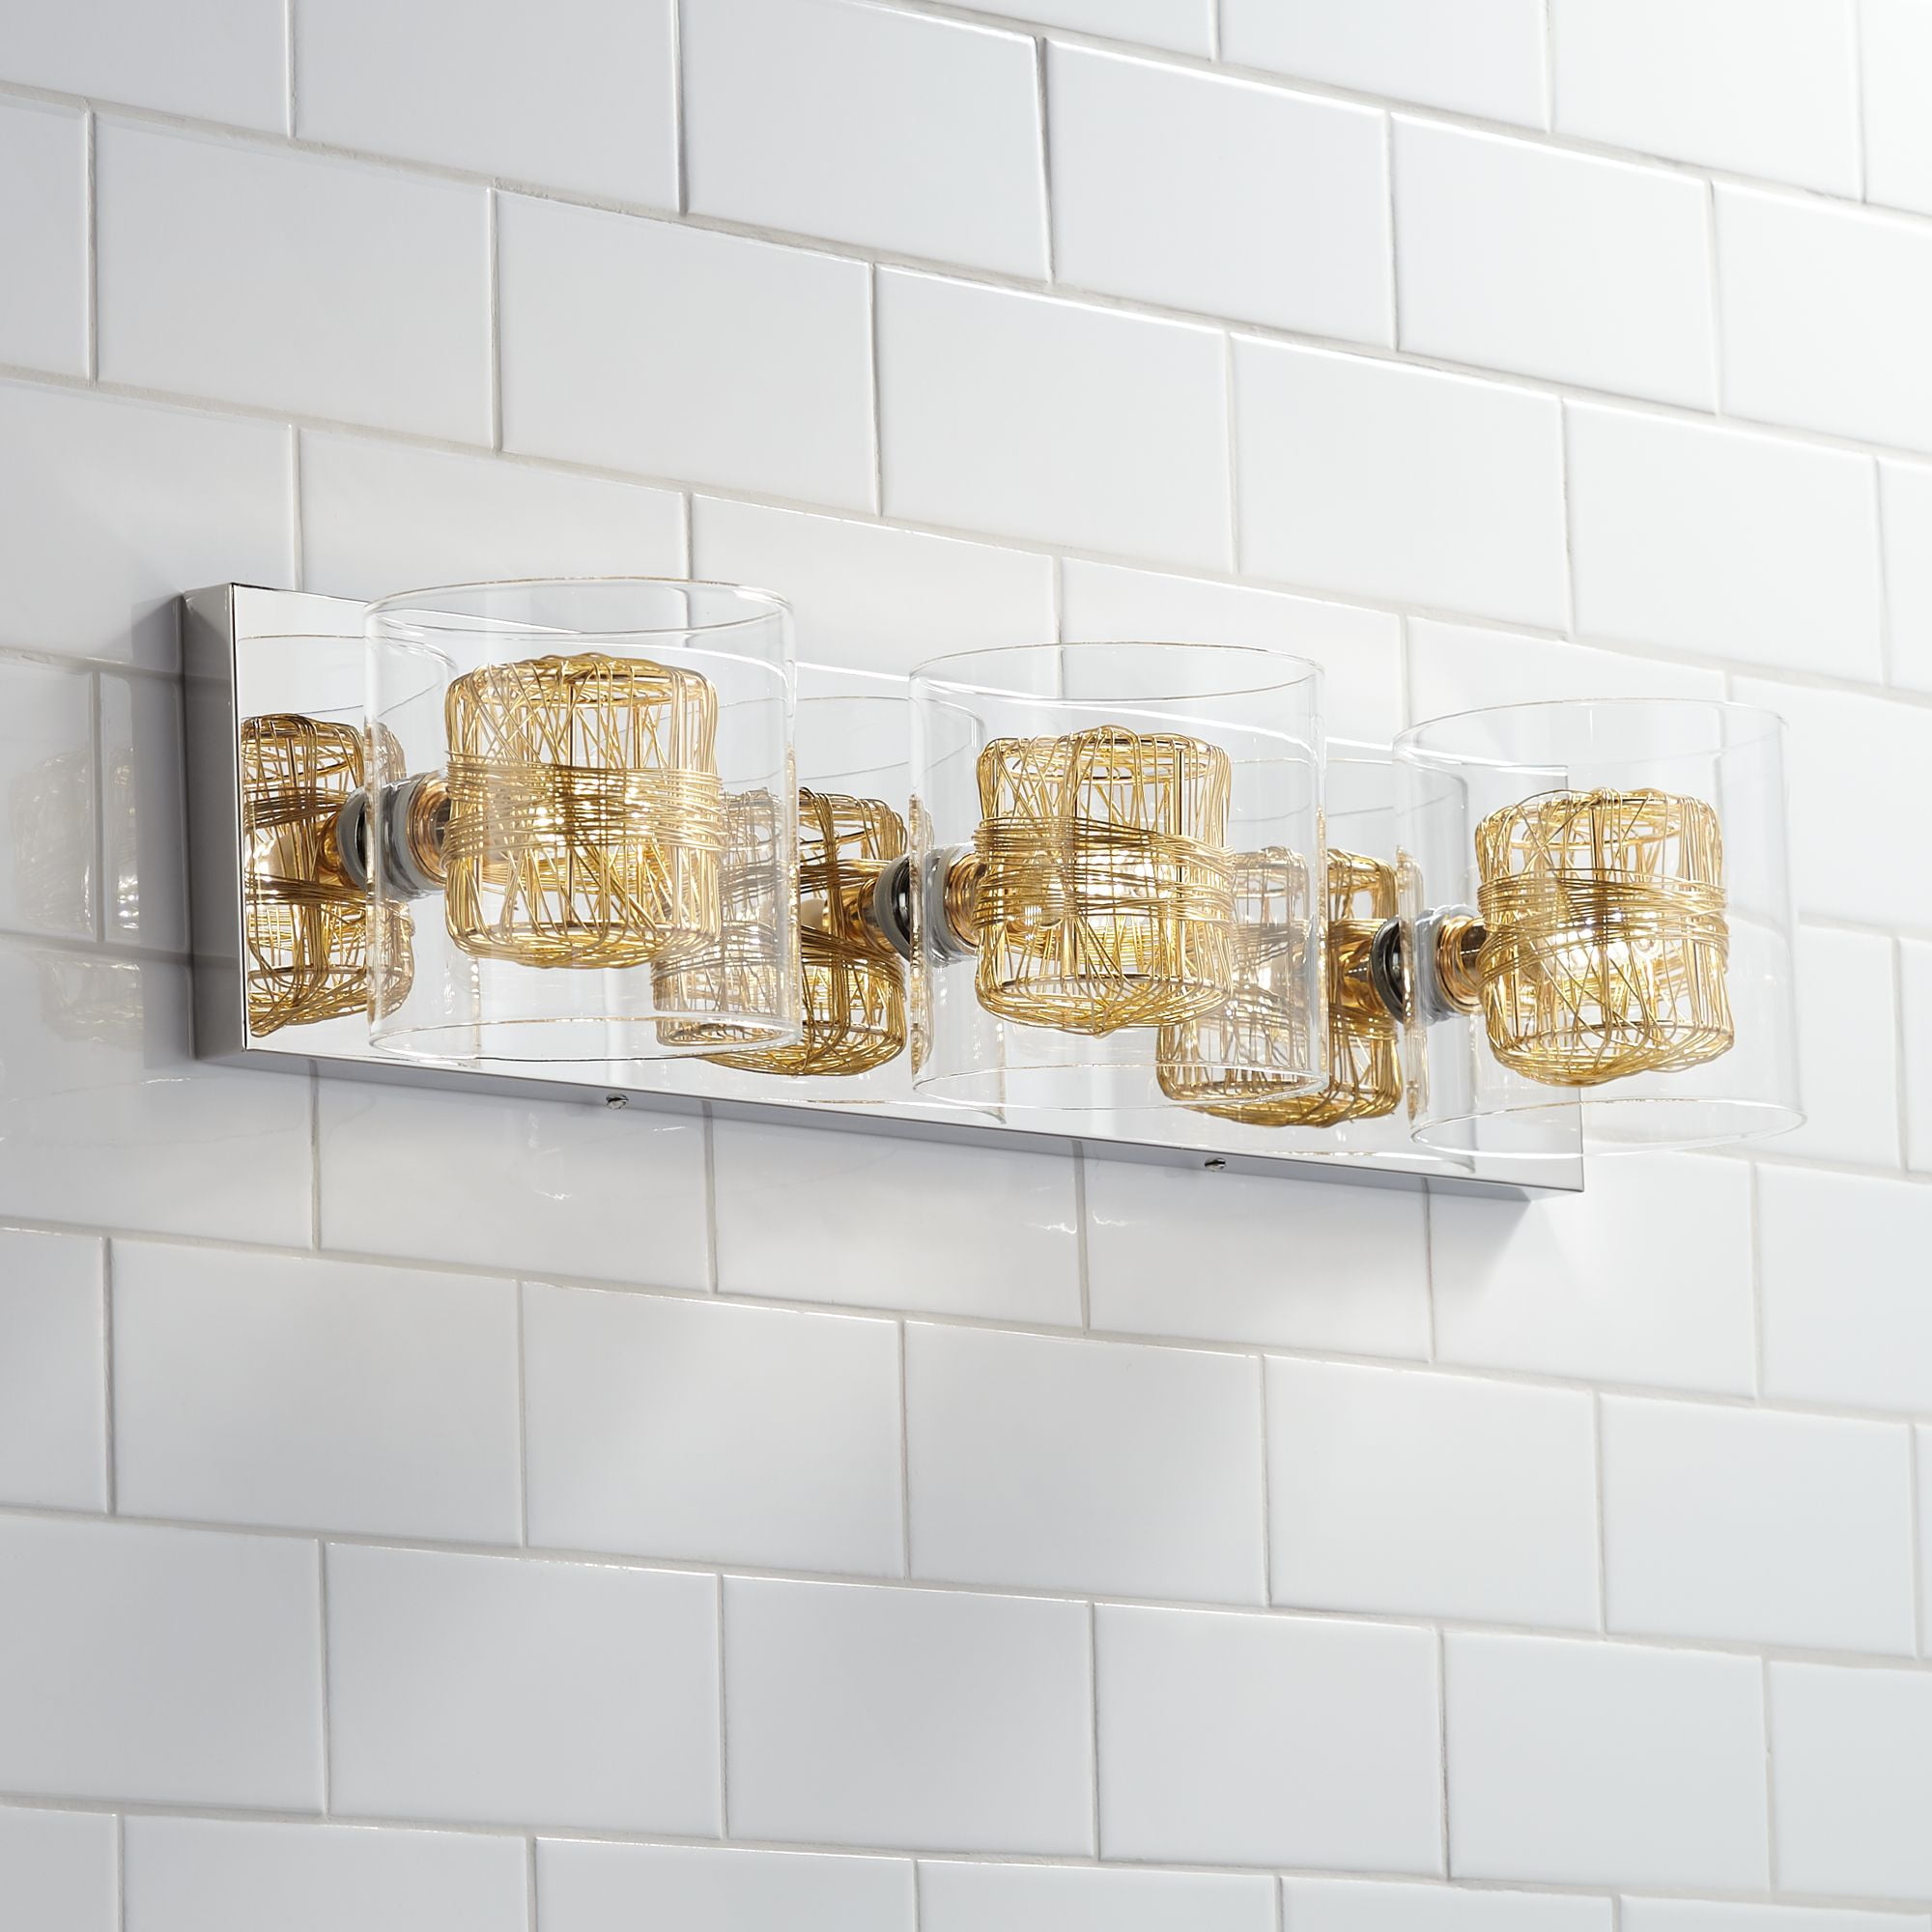 Possini Euro Design Modern Wall Light, How To Install A Bathroom Wall Light Fixture